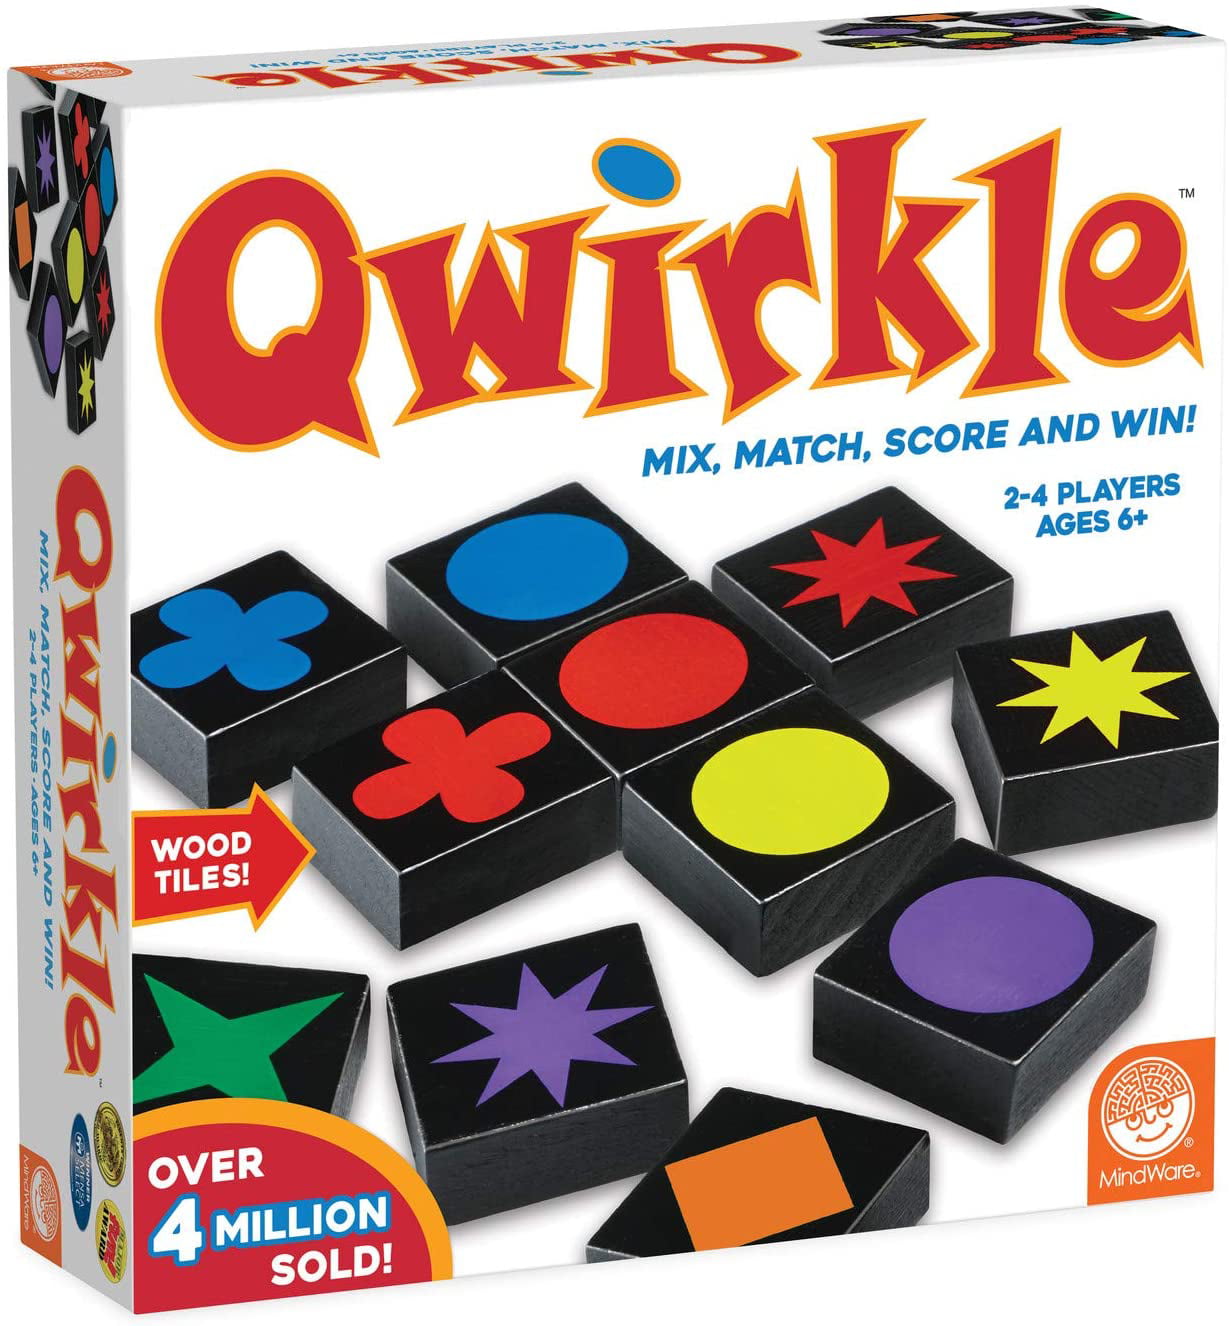 Mix Score MindWare Qwirkle Travel Size Strategy and Logic Family Game Match 